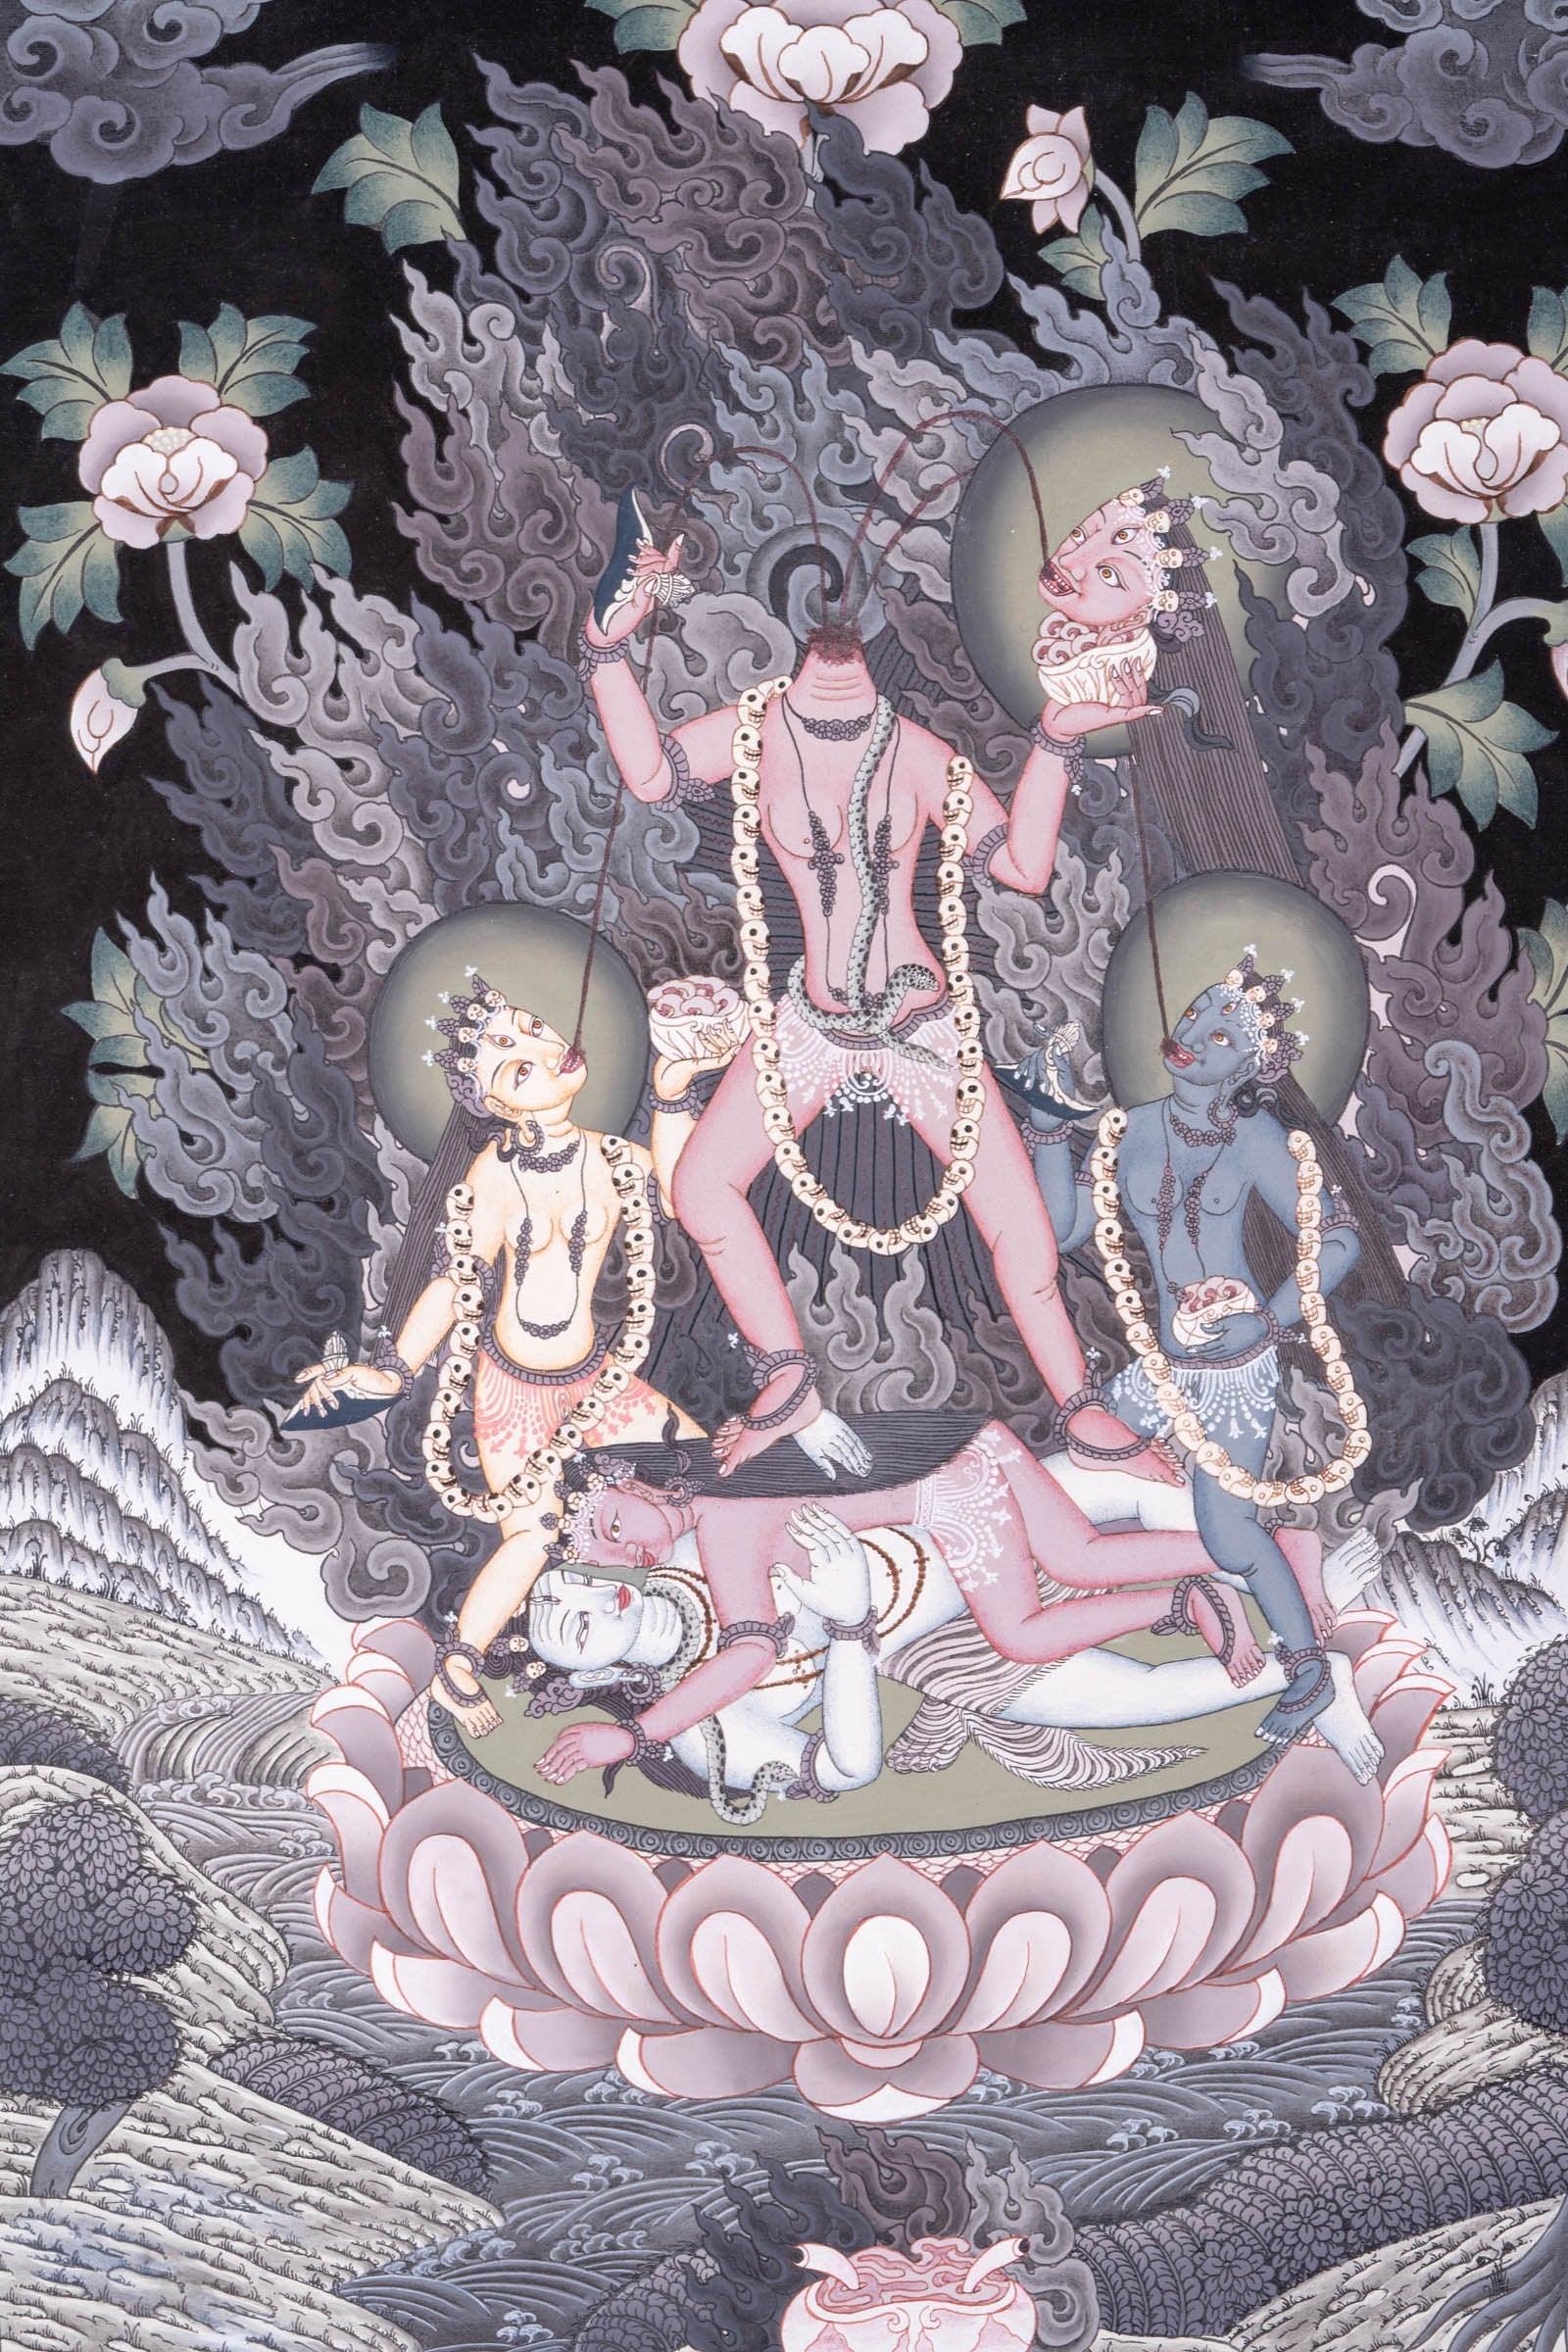 Chinnamasta Thangka painting Newari piece of art- Wrathful deity.